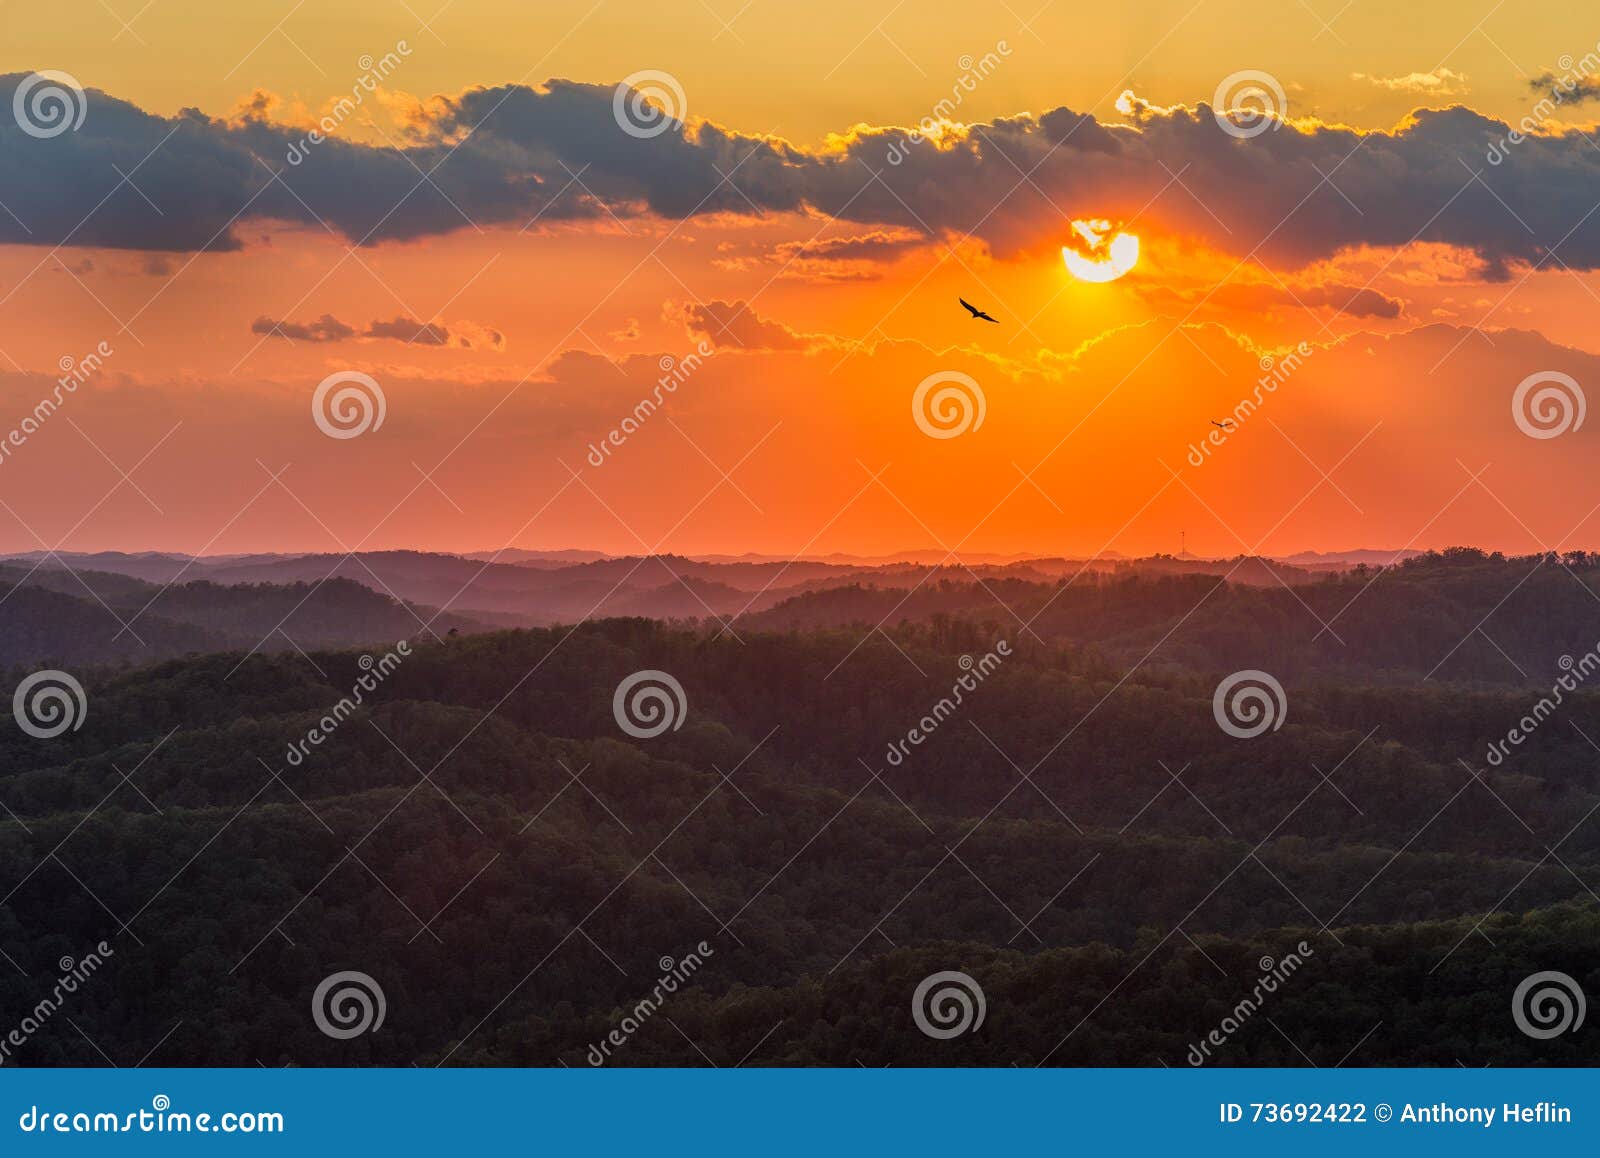 appalachian mountains, scenic sunset, kentucky